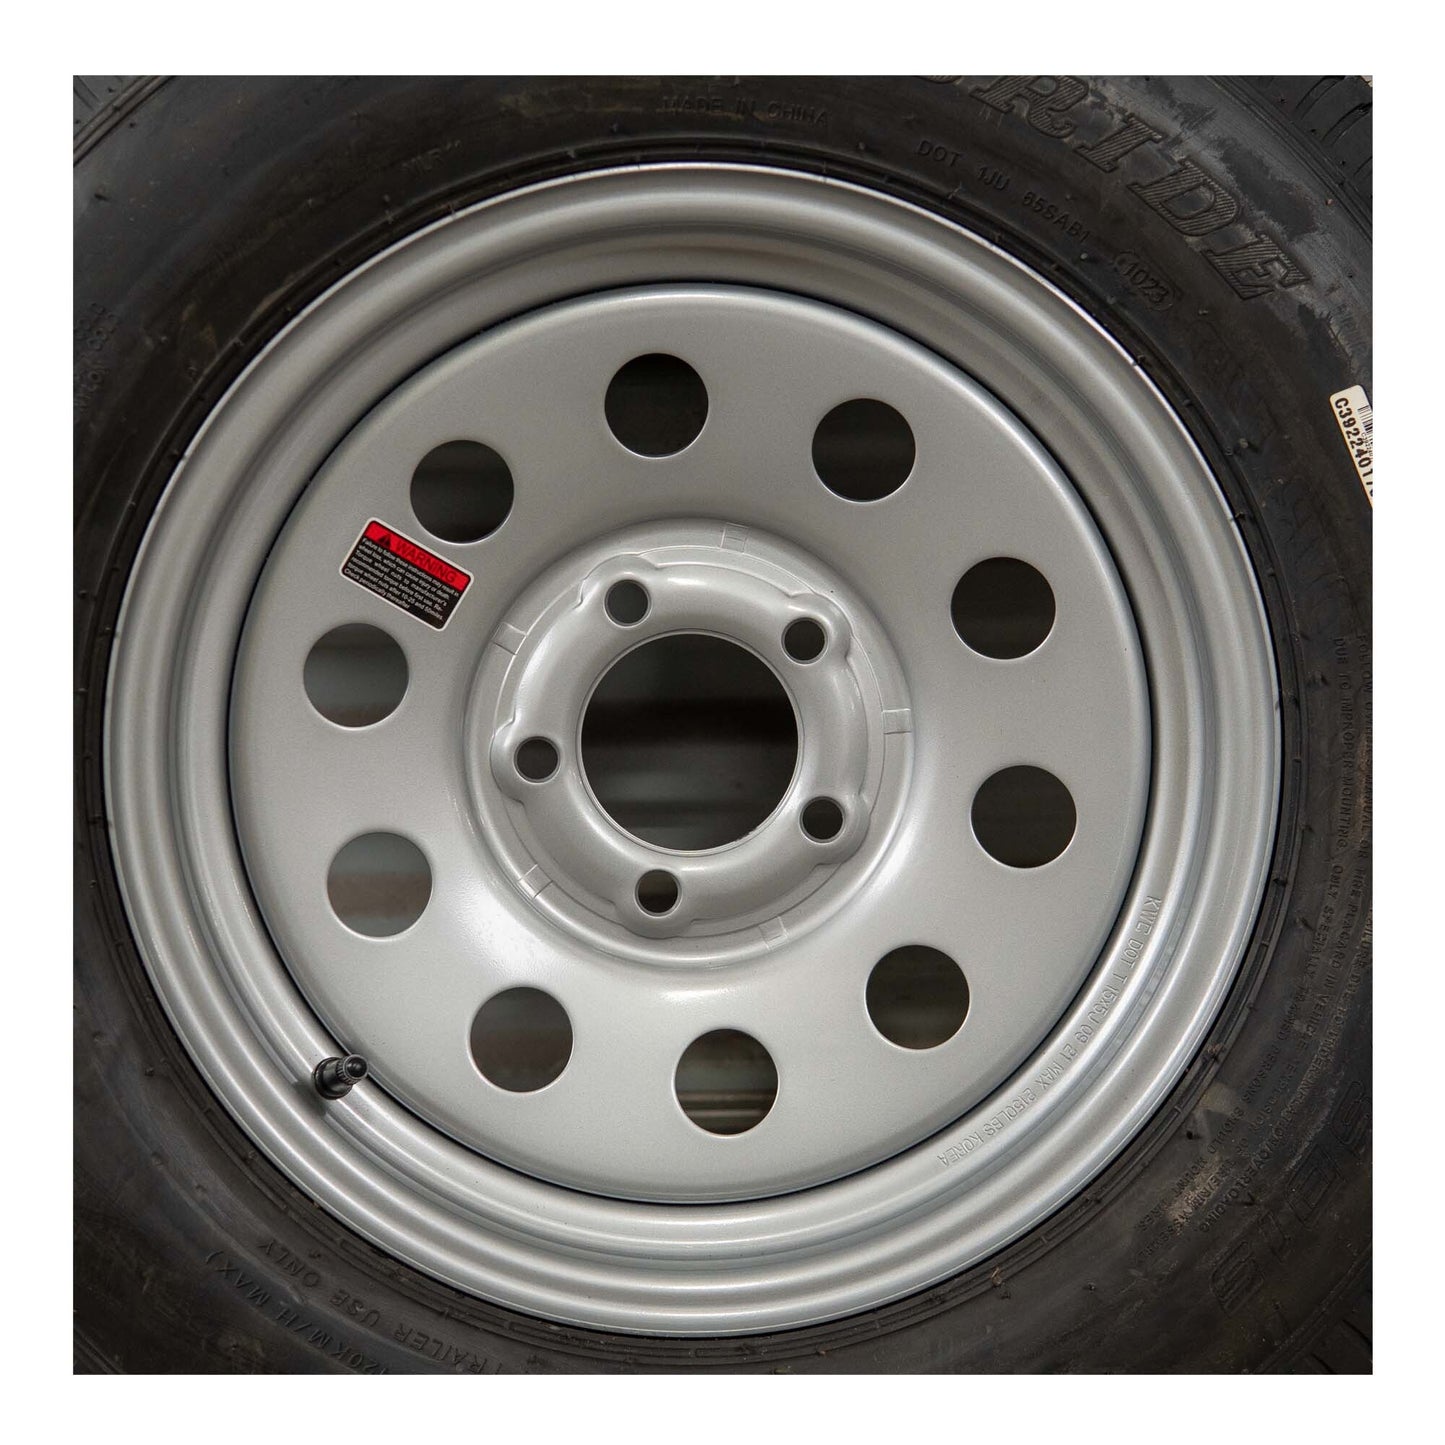 Goodride 15" 6 ply Bias Trailer Tire & Wheel - ST 205/75D15 5x4.5 Lug (Silver Mod)